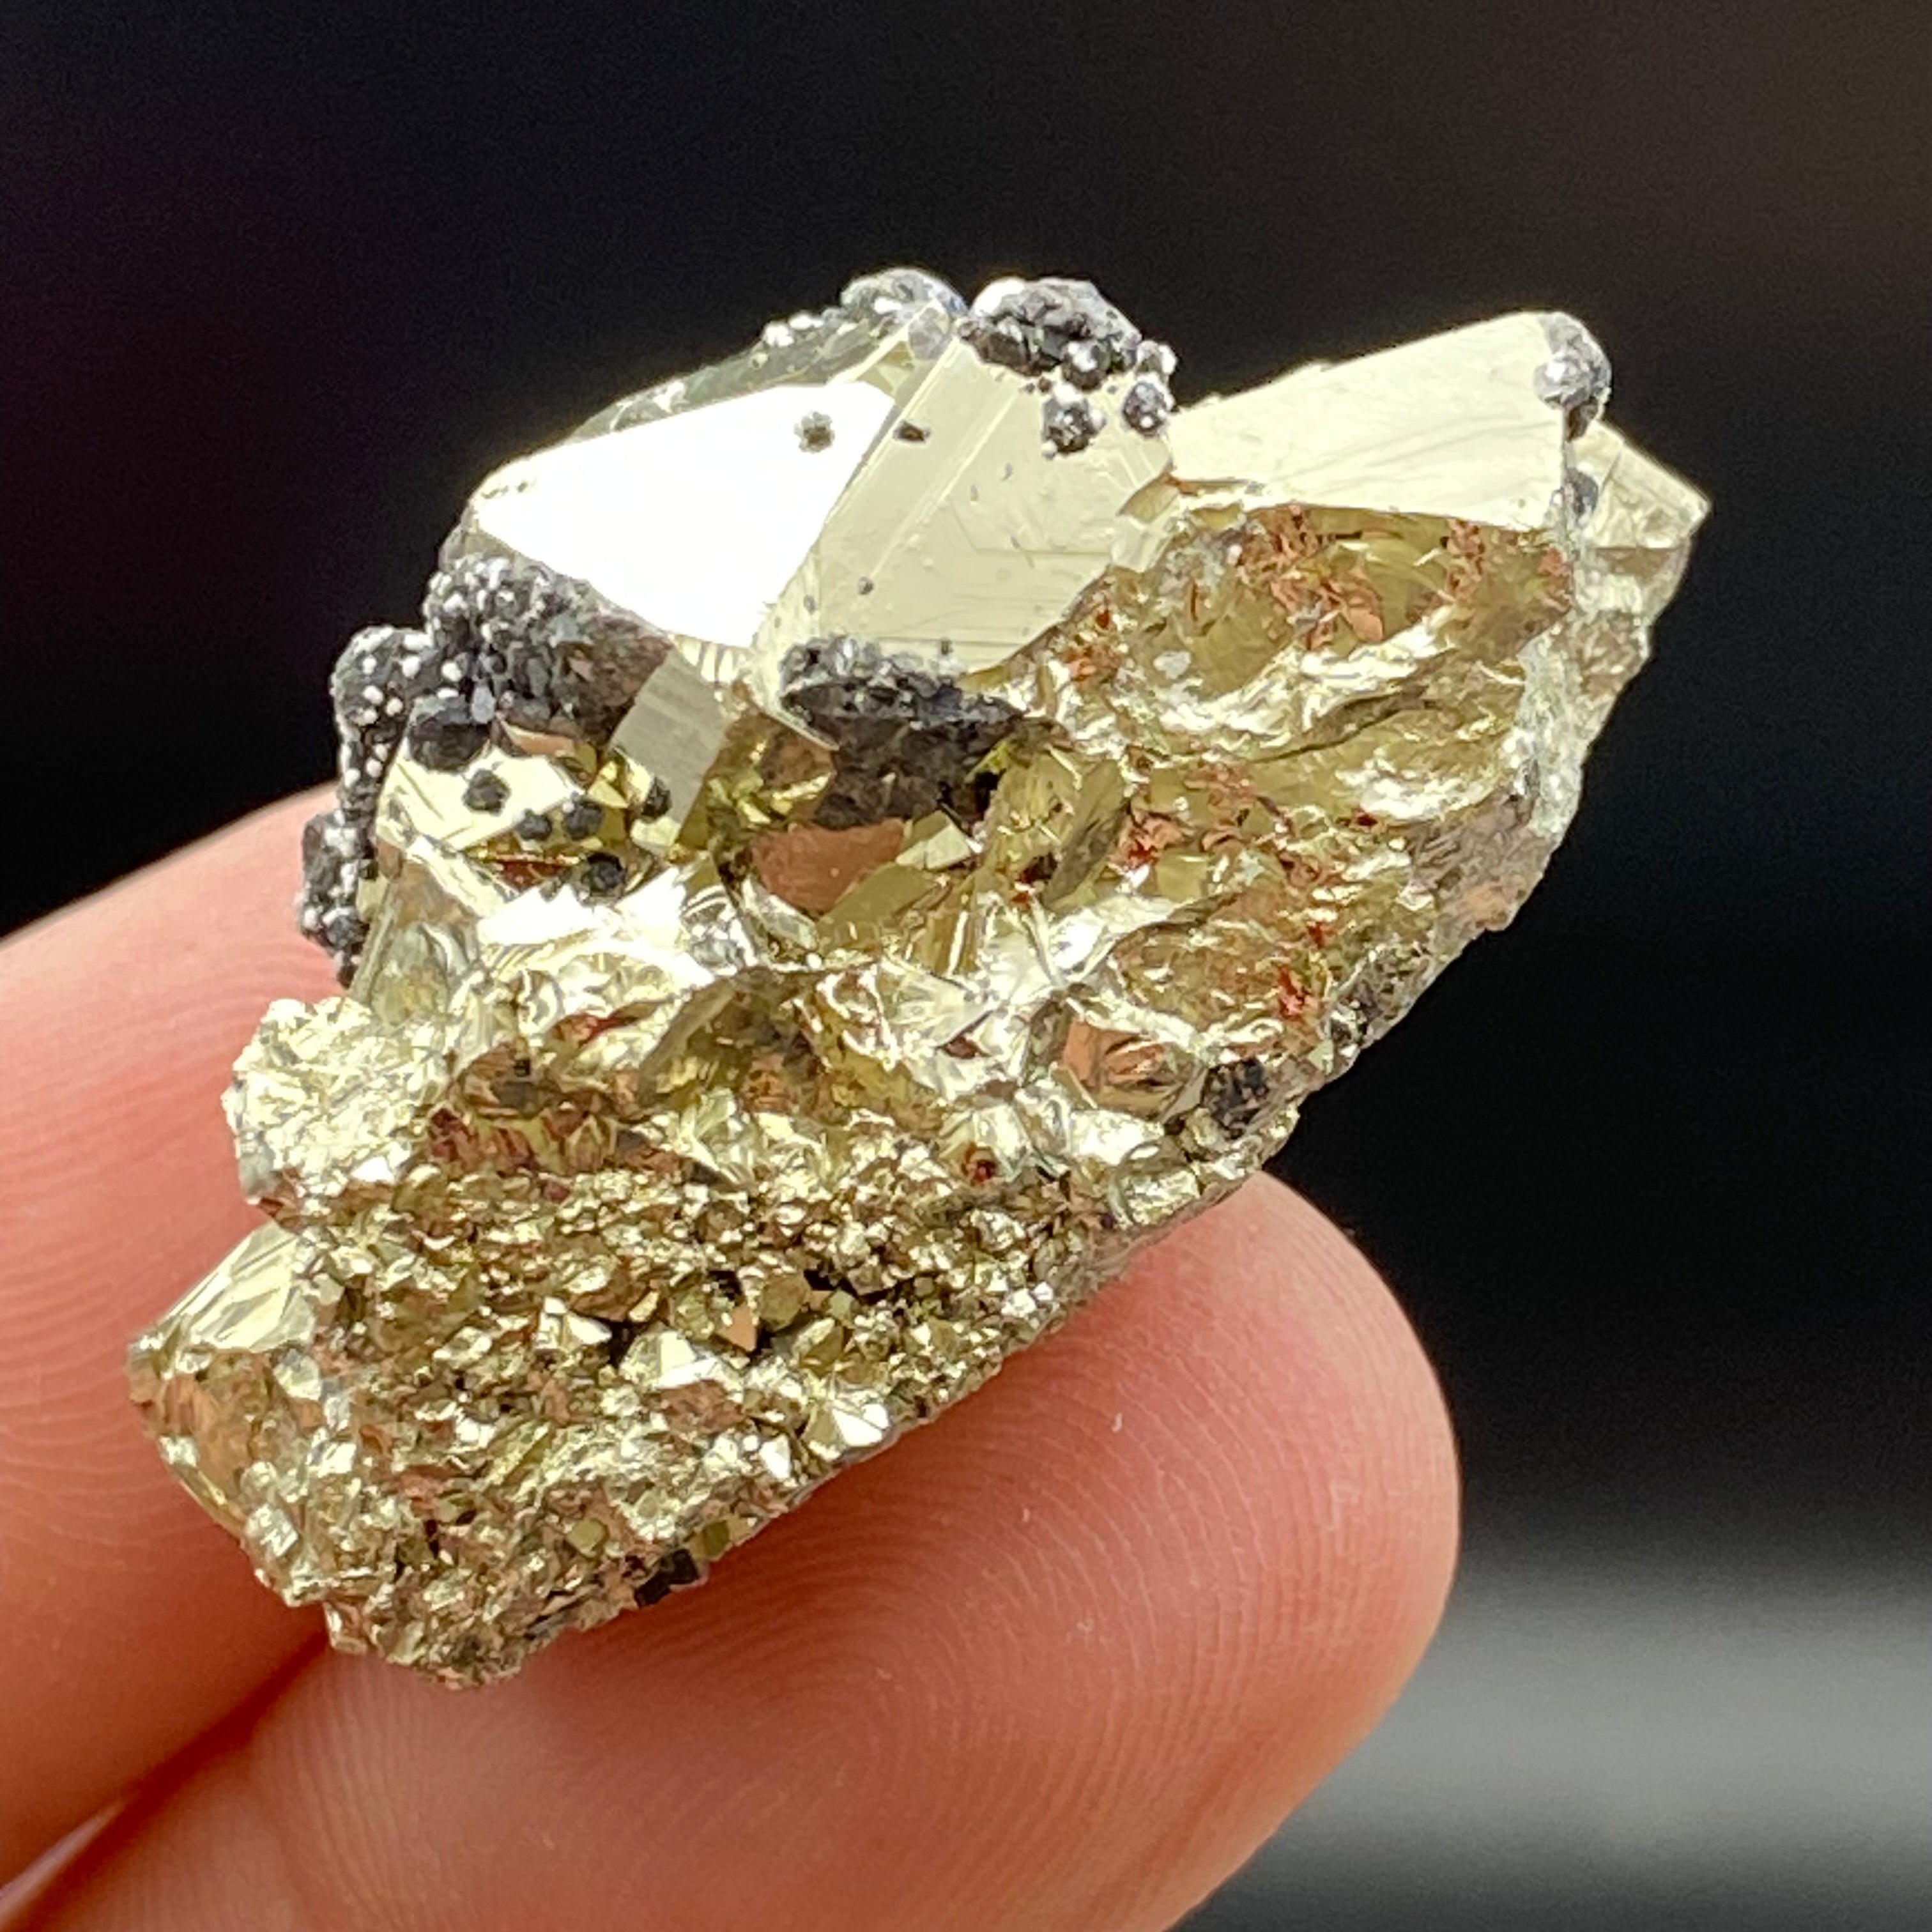 Peruvian Pyrite Crystal - 133